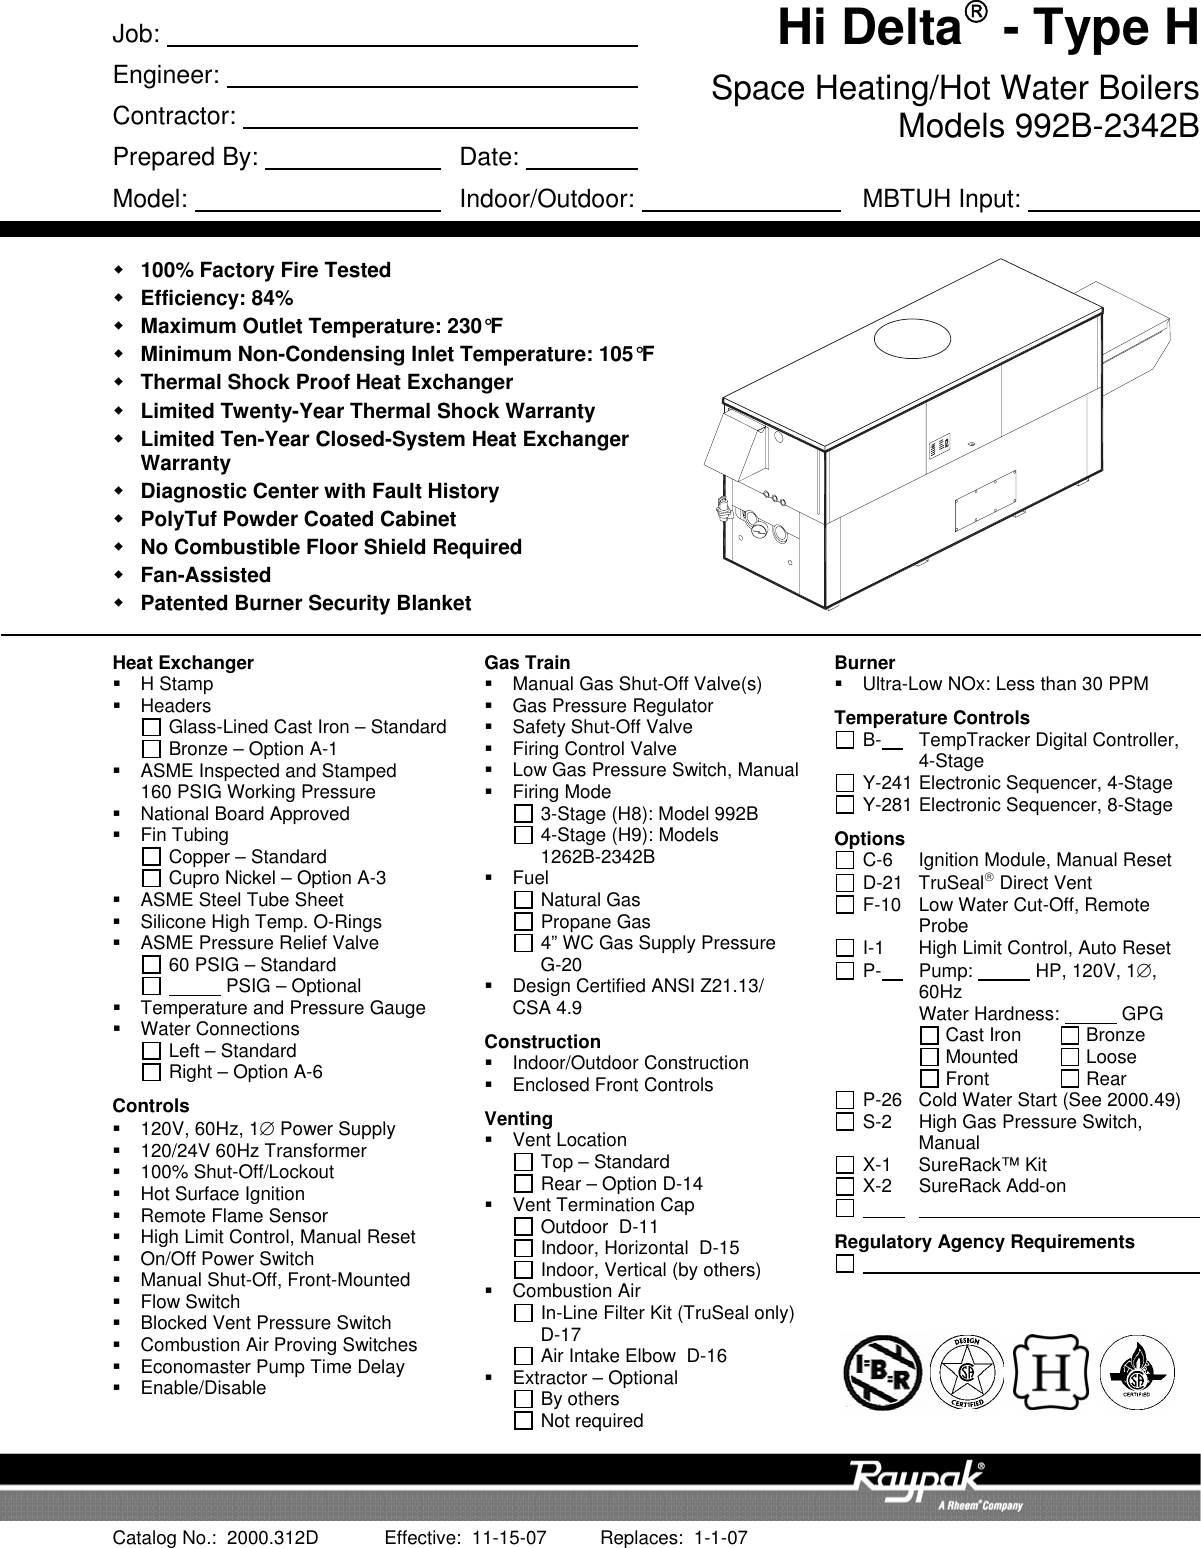 Page 1 of 2 - Raypak Raypak-Hi-Delta-992B-2342B-Users-Manual 2000.312D